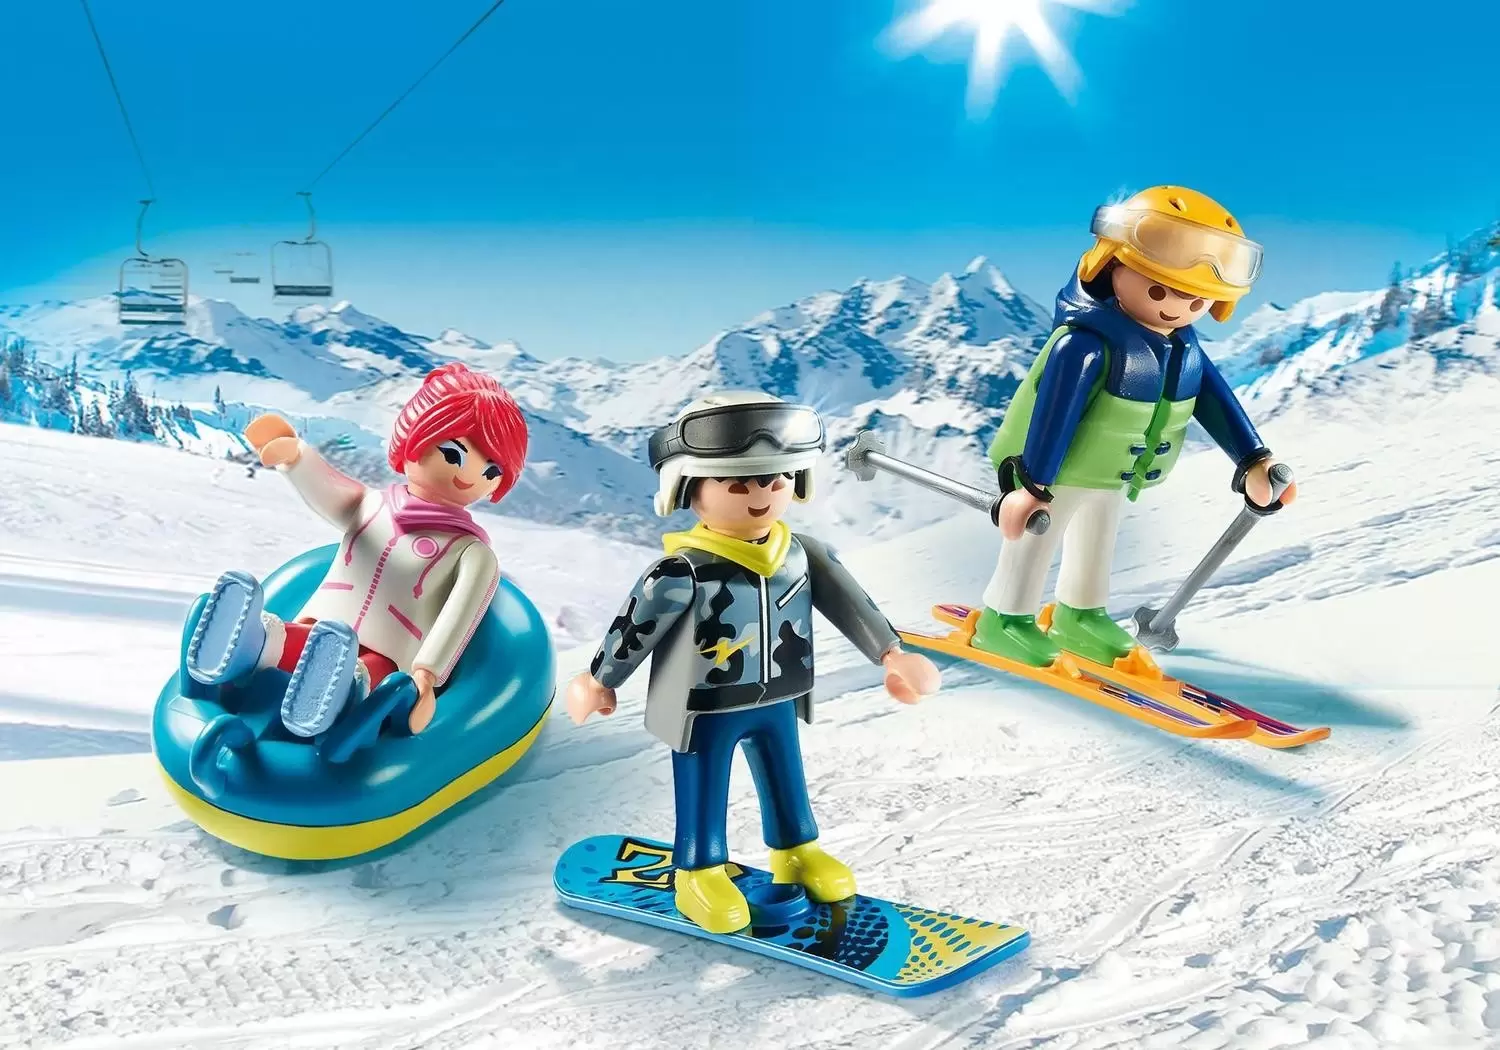 Playmobil Winter sports - Recreational skiers